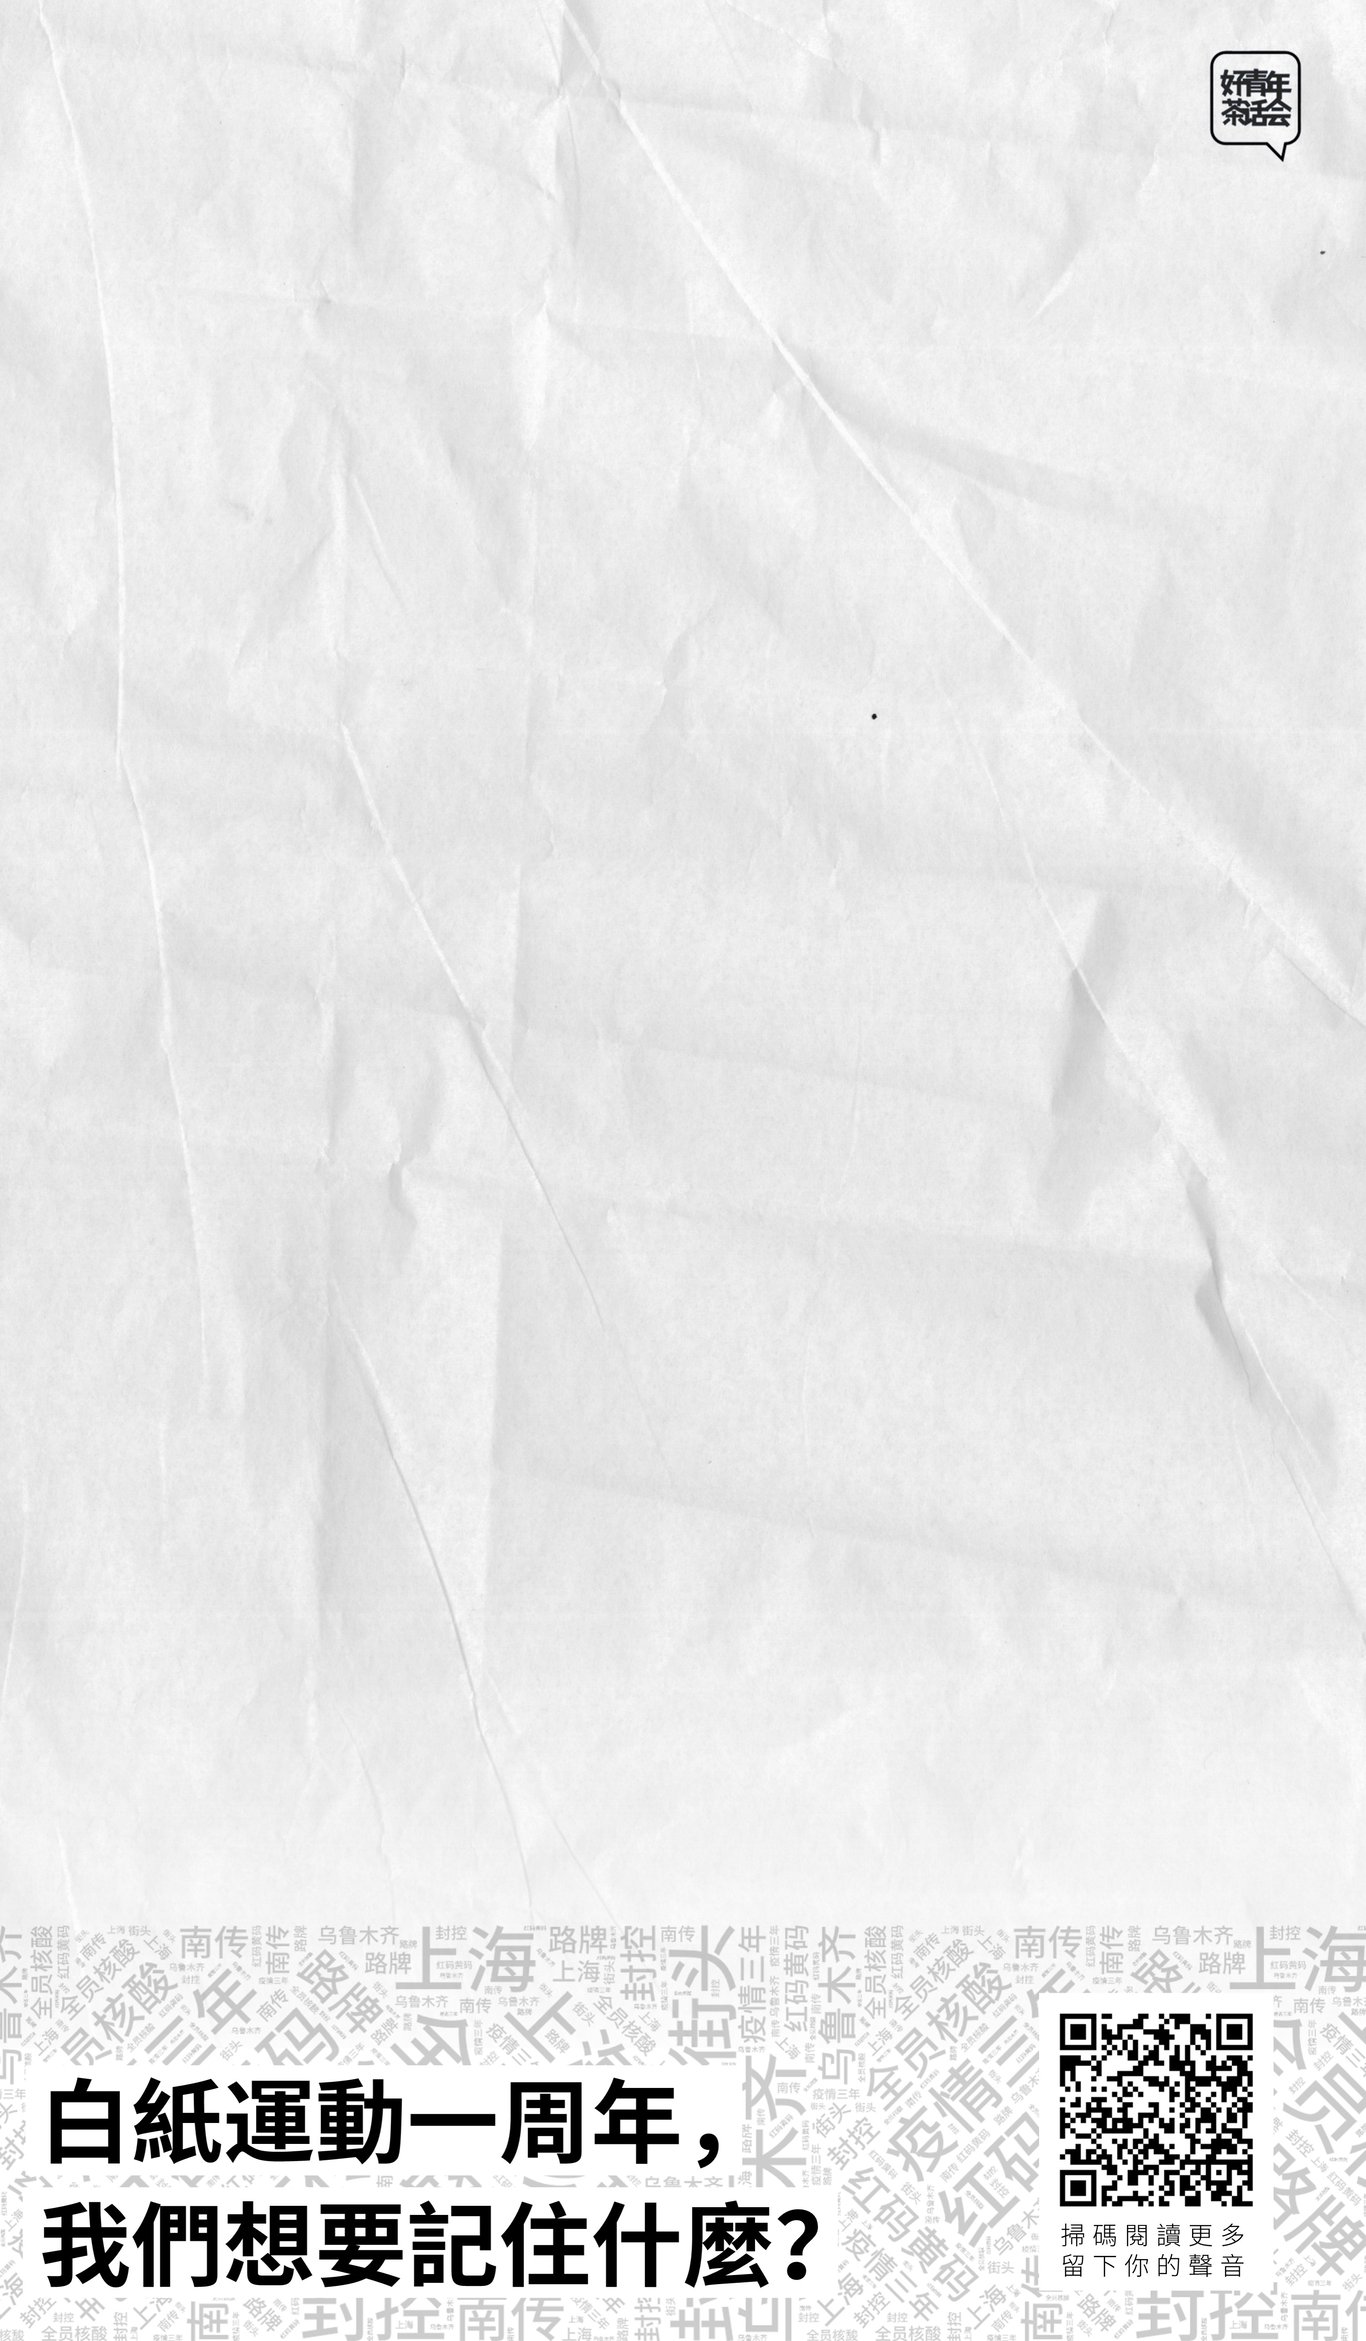 白色复古纸张纹理背景素材 White Vintage Paper Textures – 设计小咖